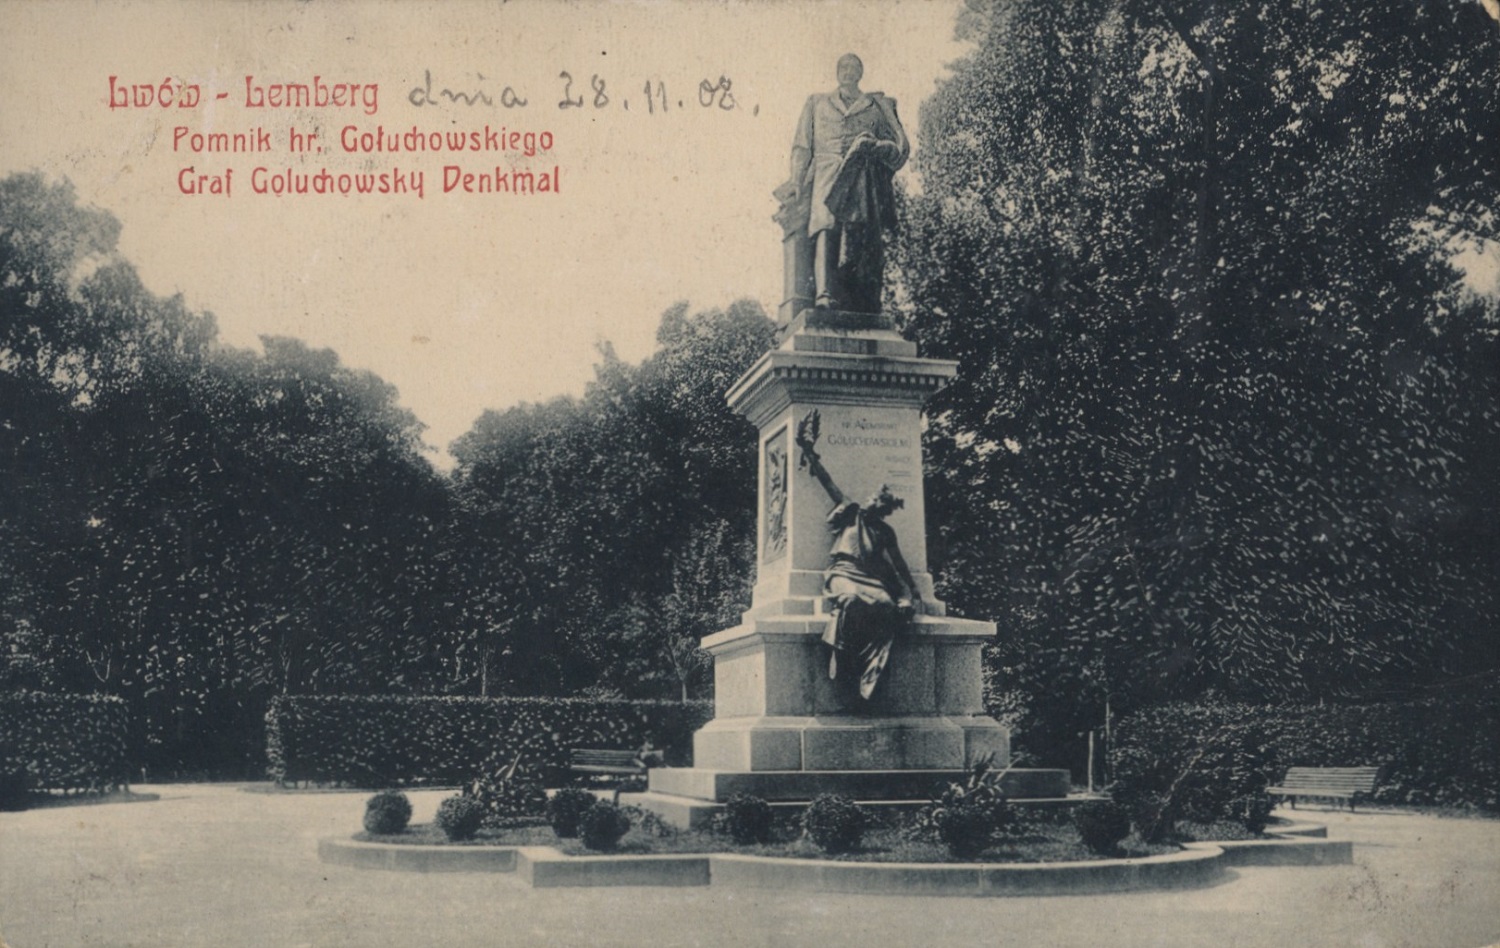 The monument to Agenor Gołuchowski